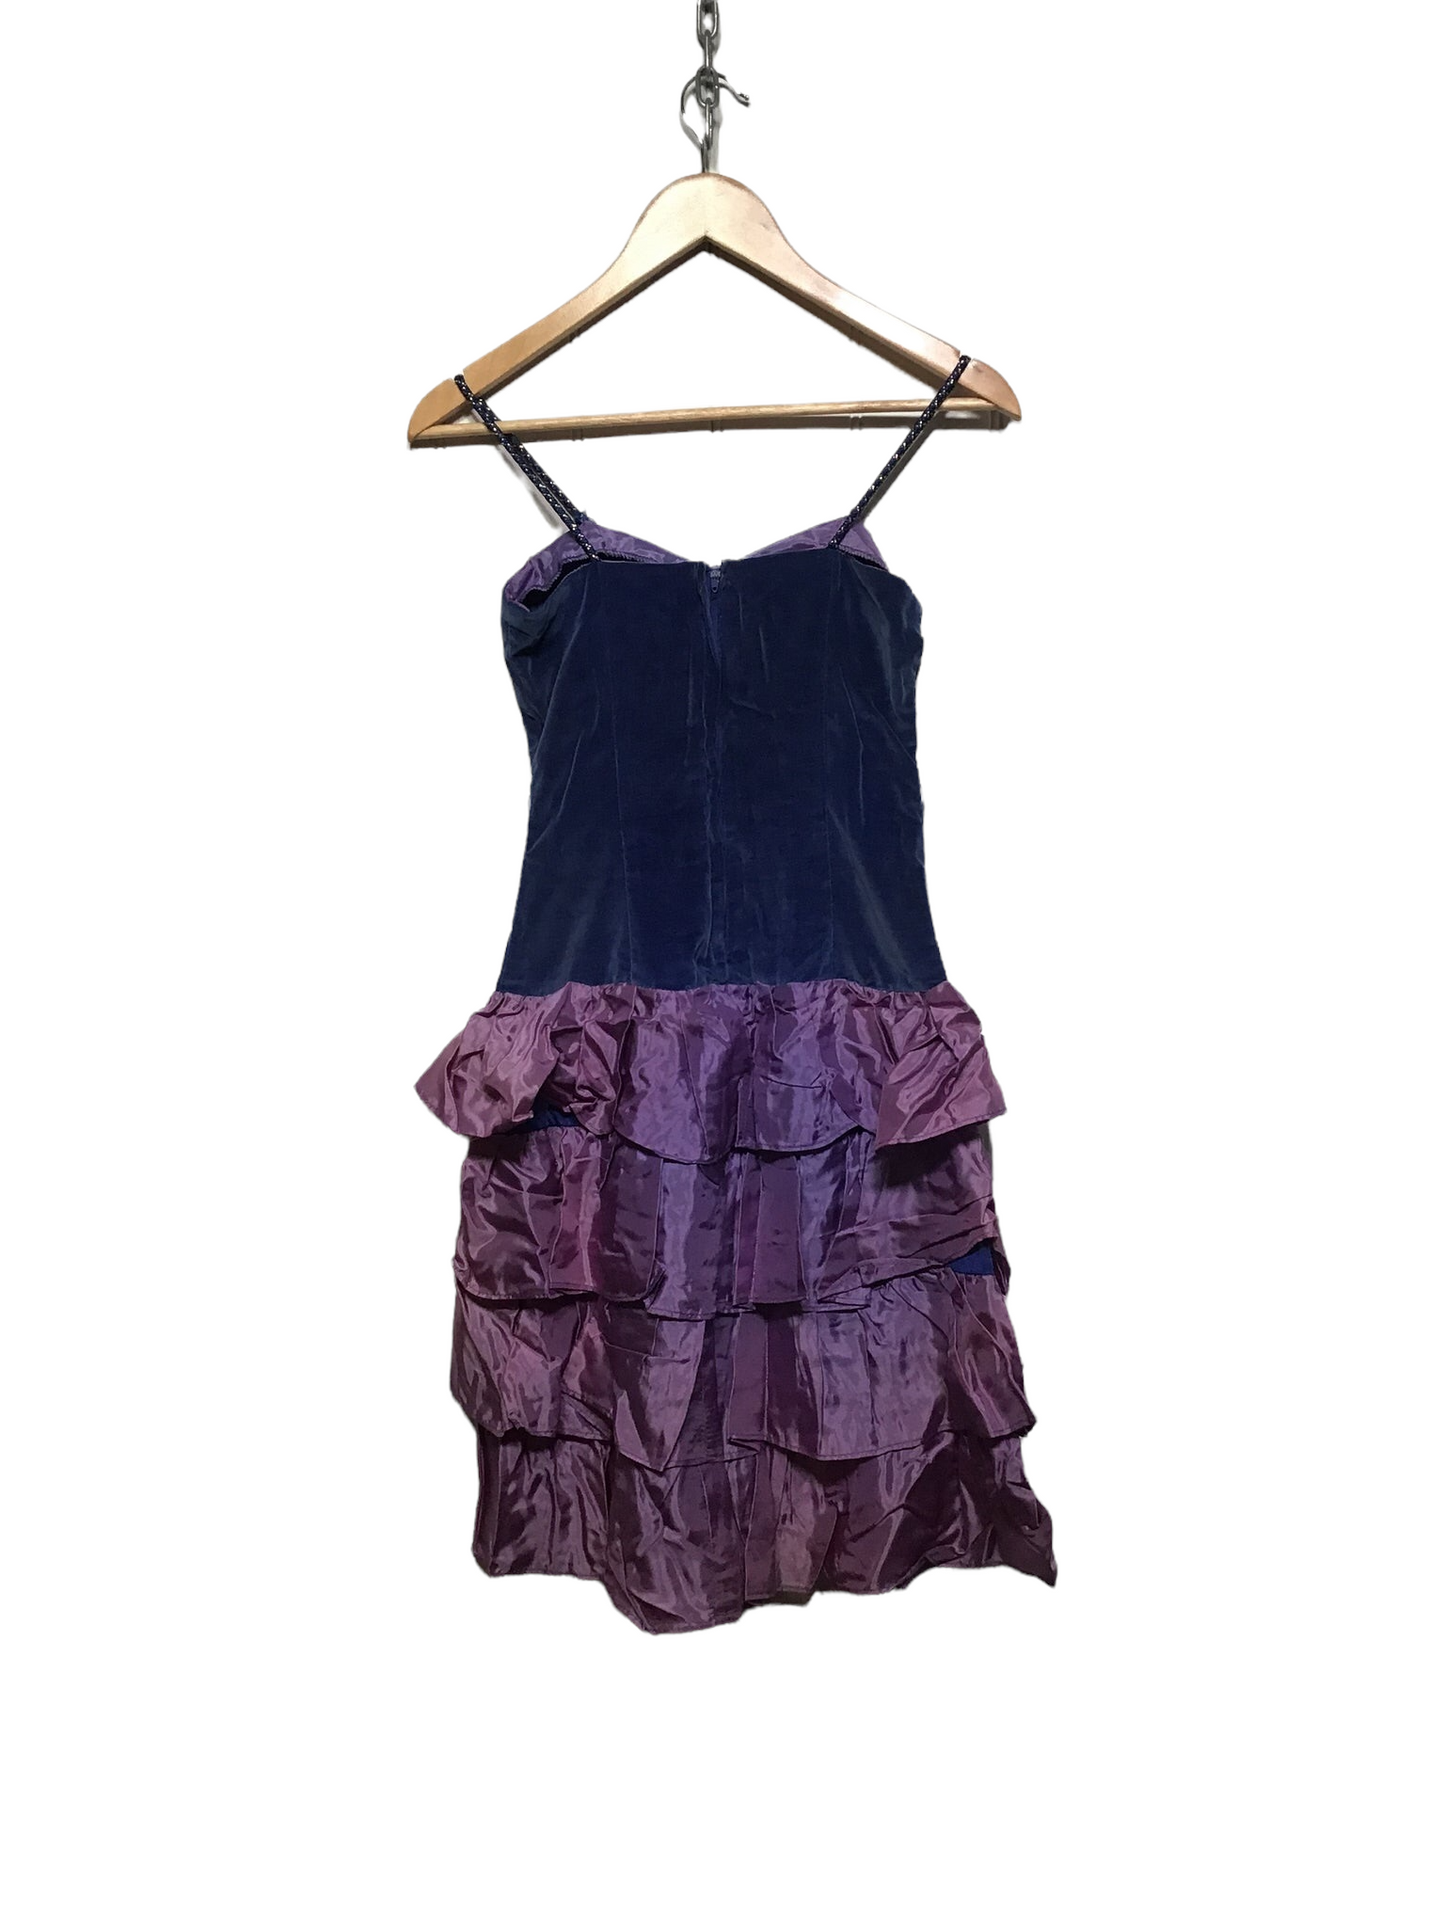 Blue Velvet Evening Dress (Size XS)